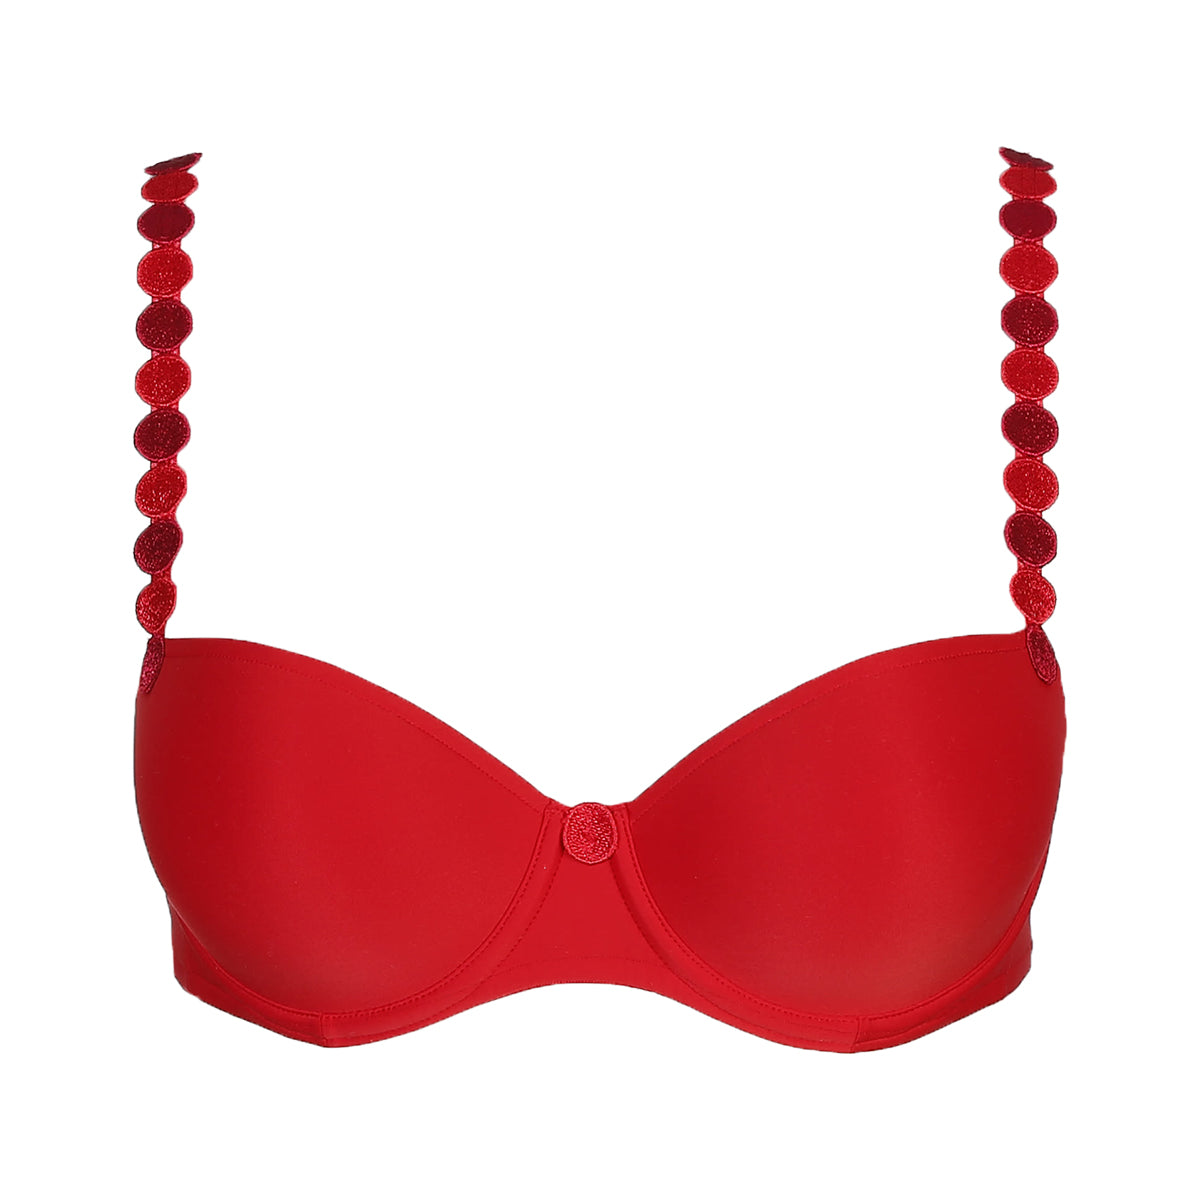 Marie Jo AVERO - Underwired bra - scarlet/red - Zalando.de